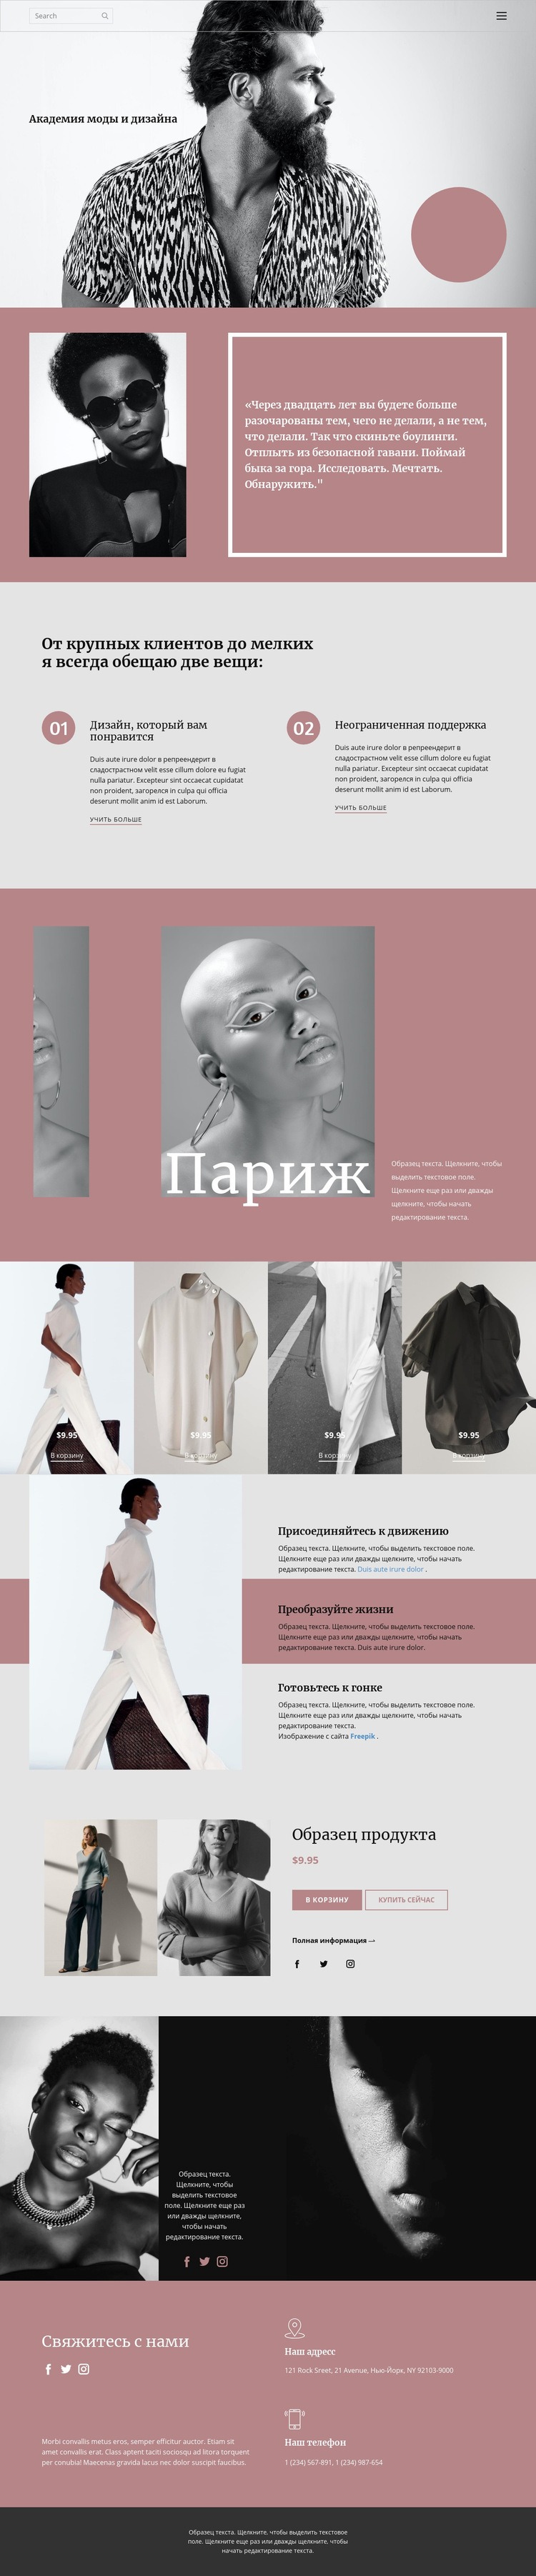 Студия моды Шаблон веб-сайта